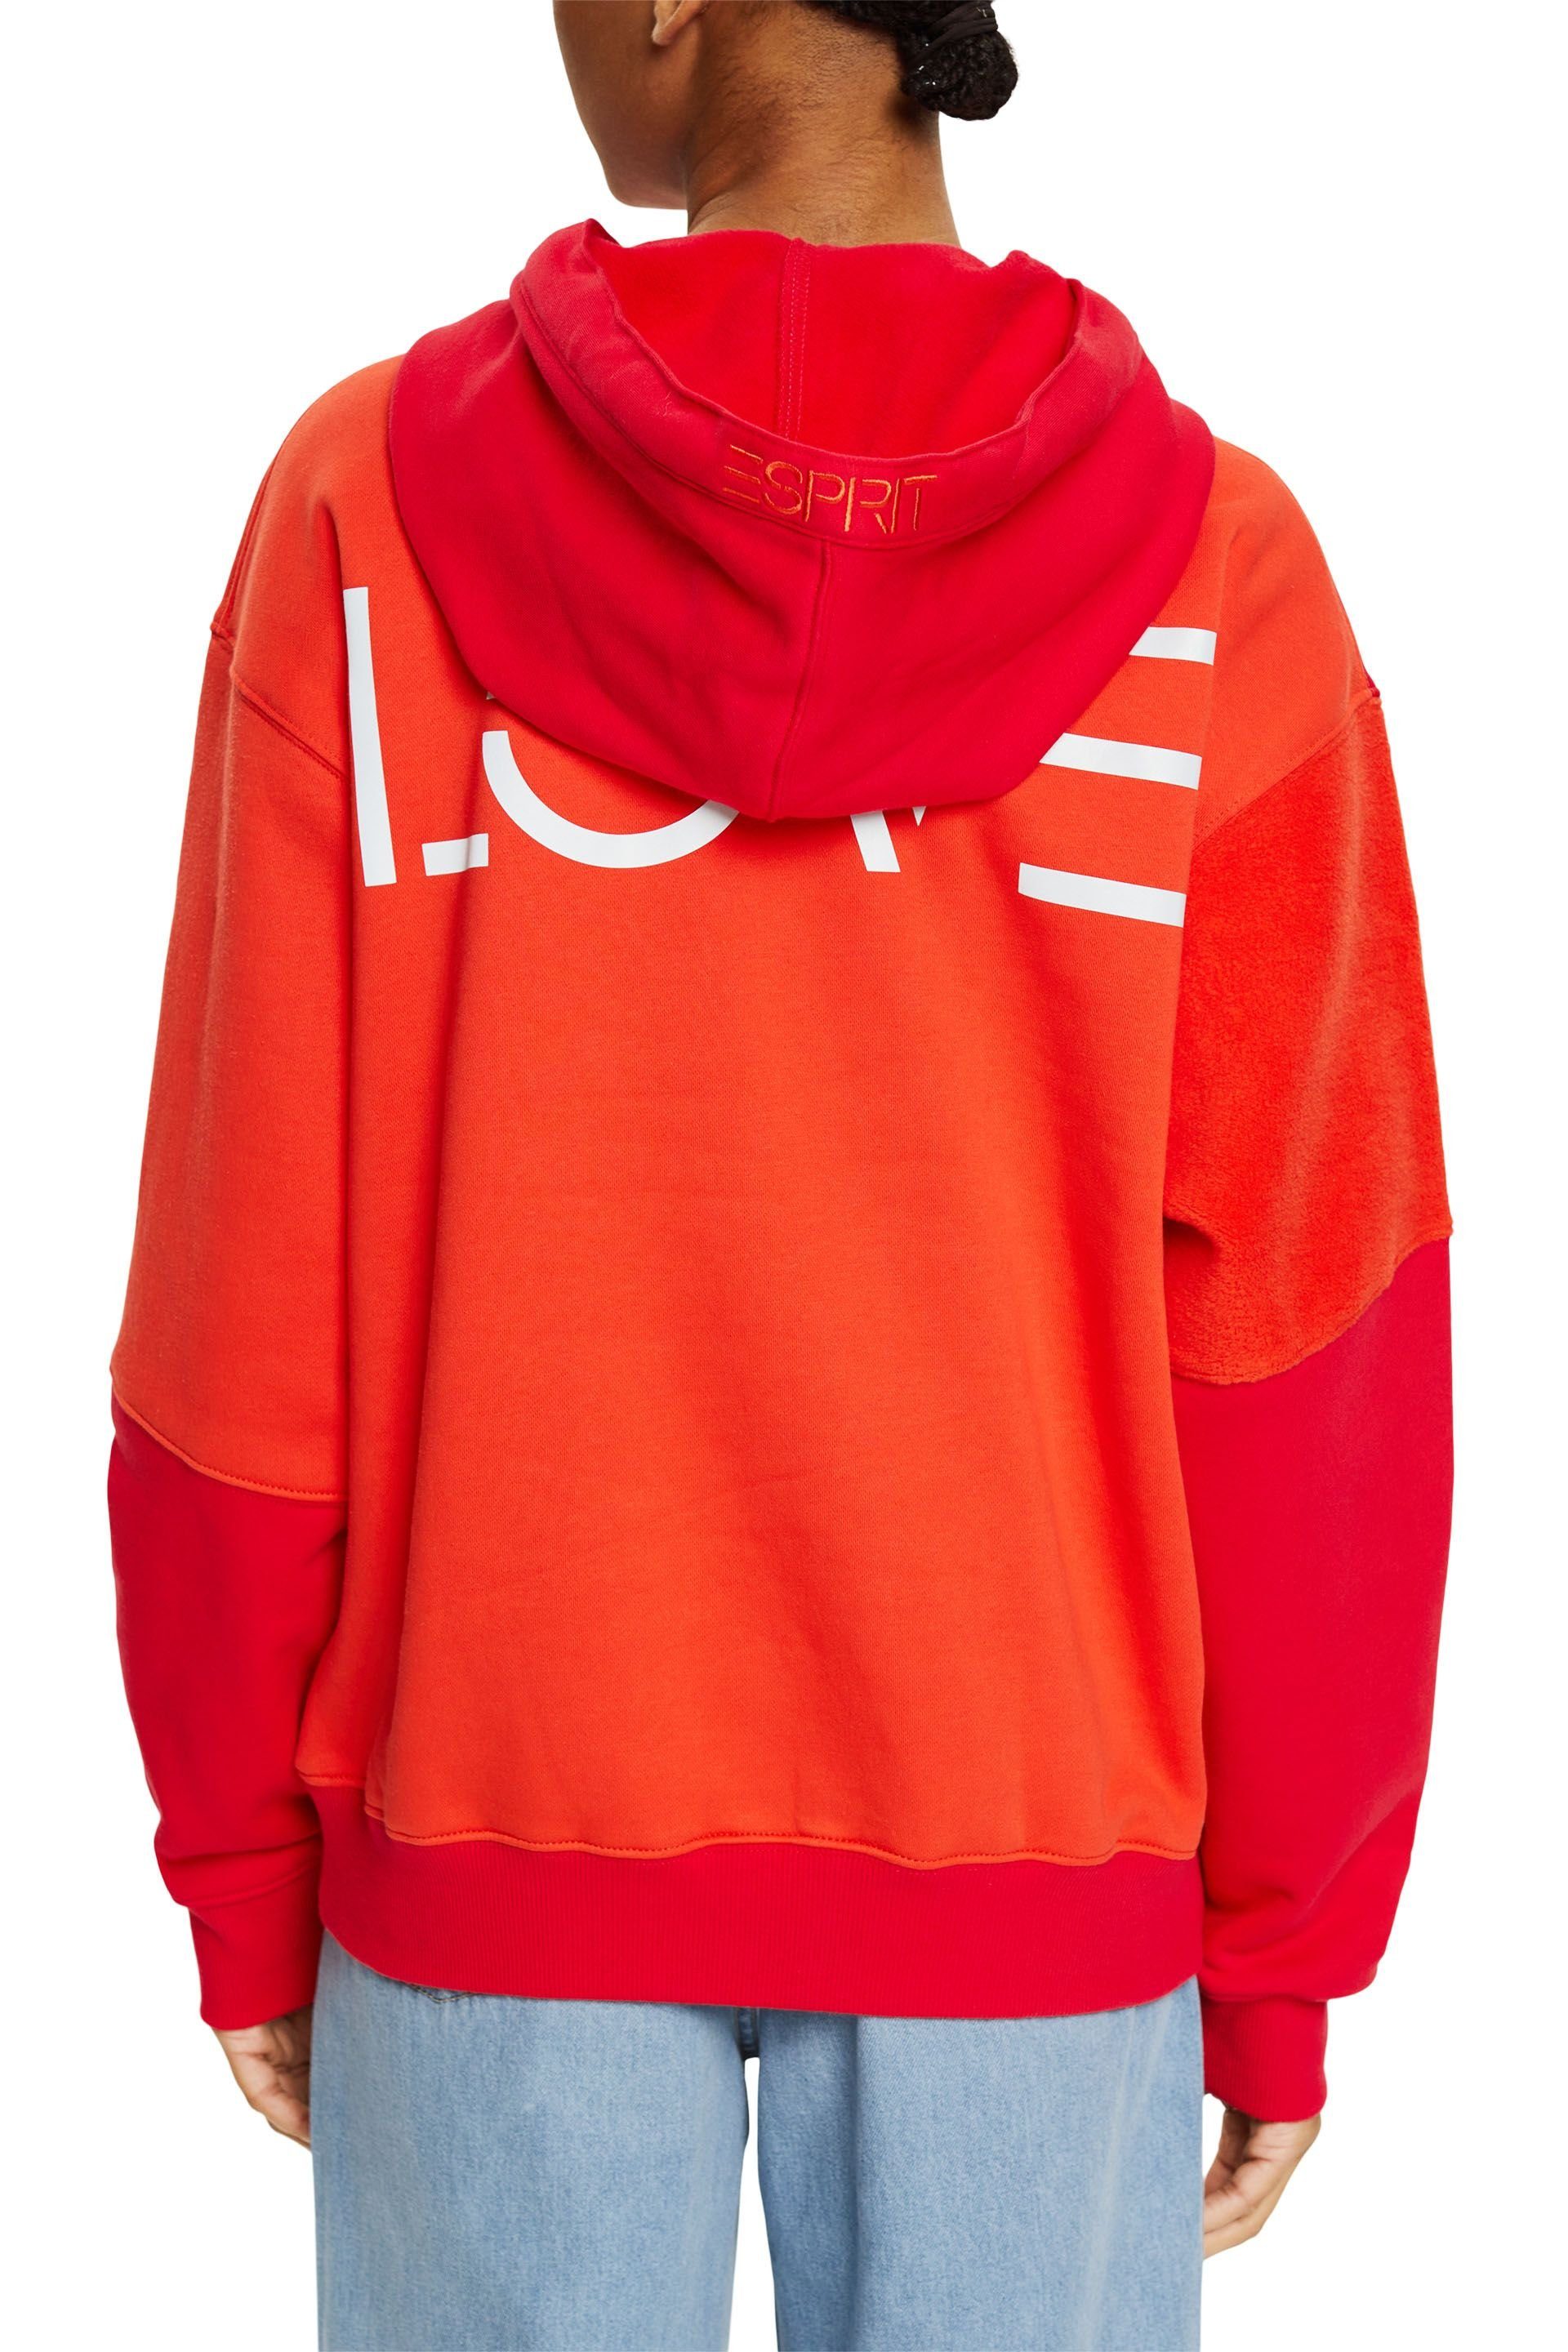 Sweatshirt Esprit orange